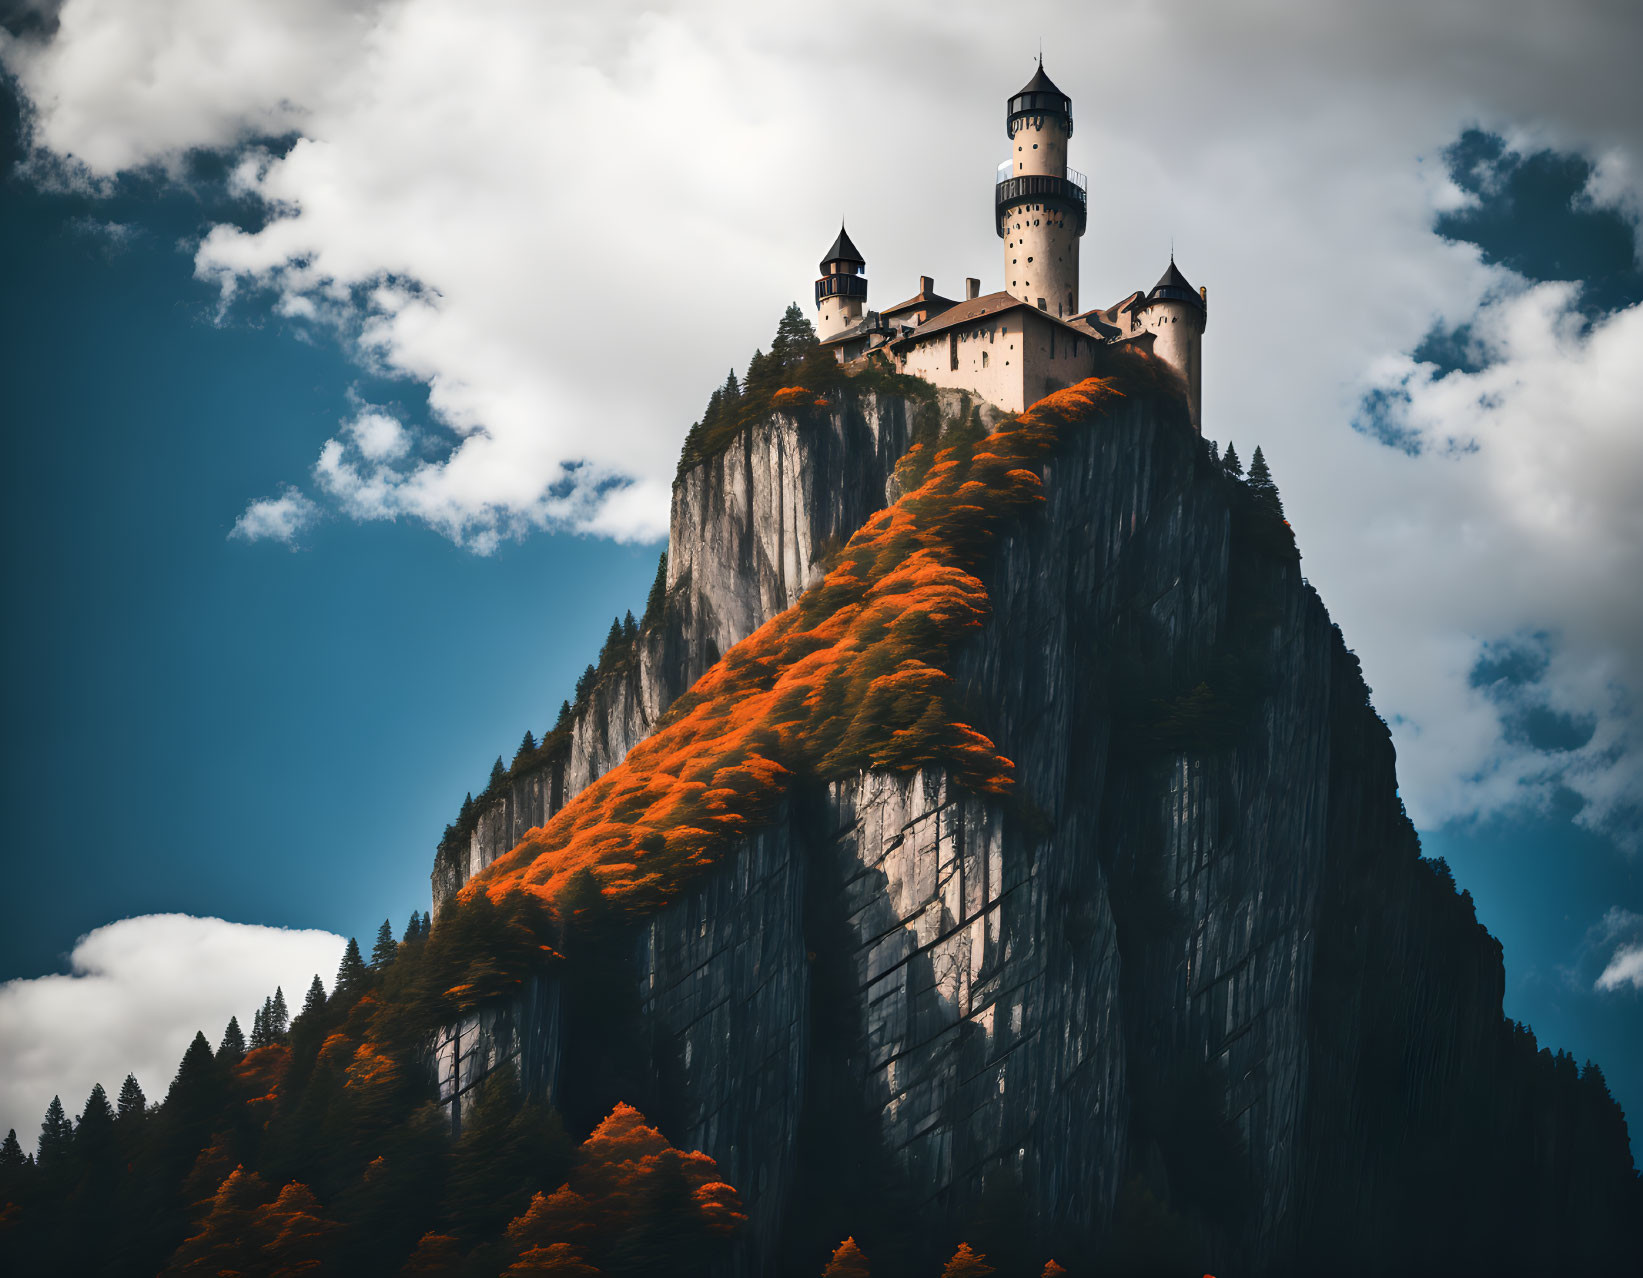 Majestic castle on cliff with orange foliage under dramatic sky